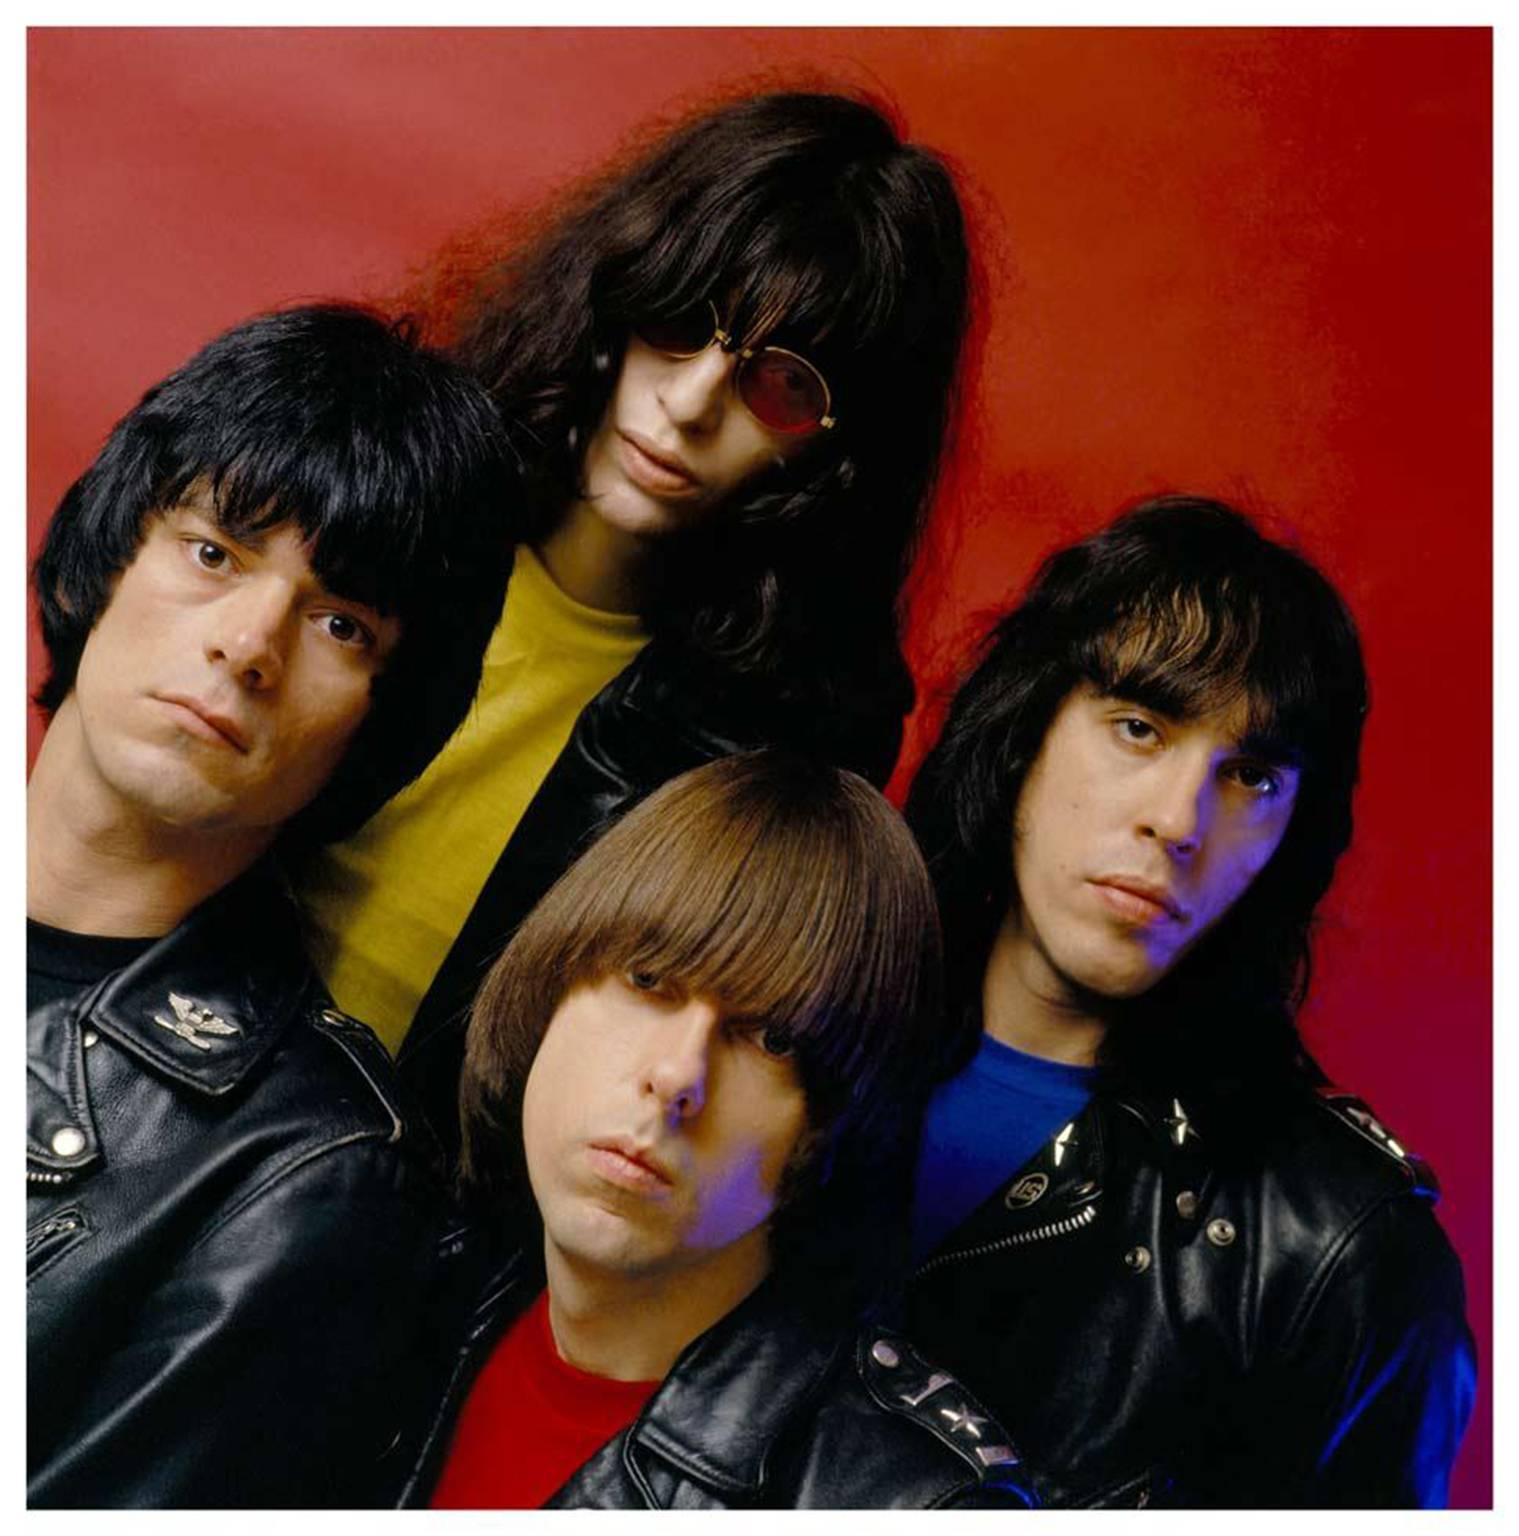 Mick Rock Portrait Photograph - The Ramones, 1979